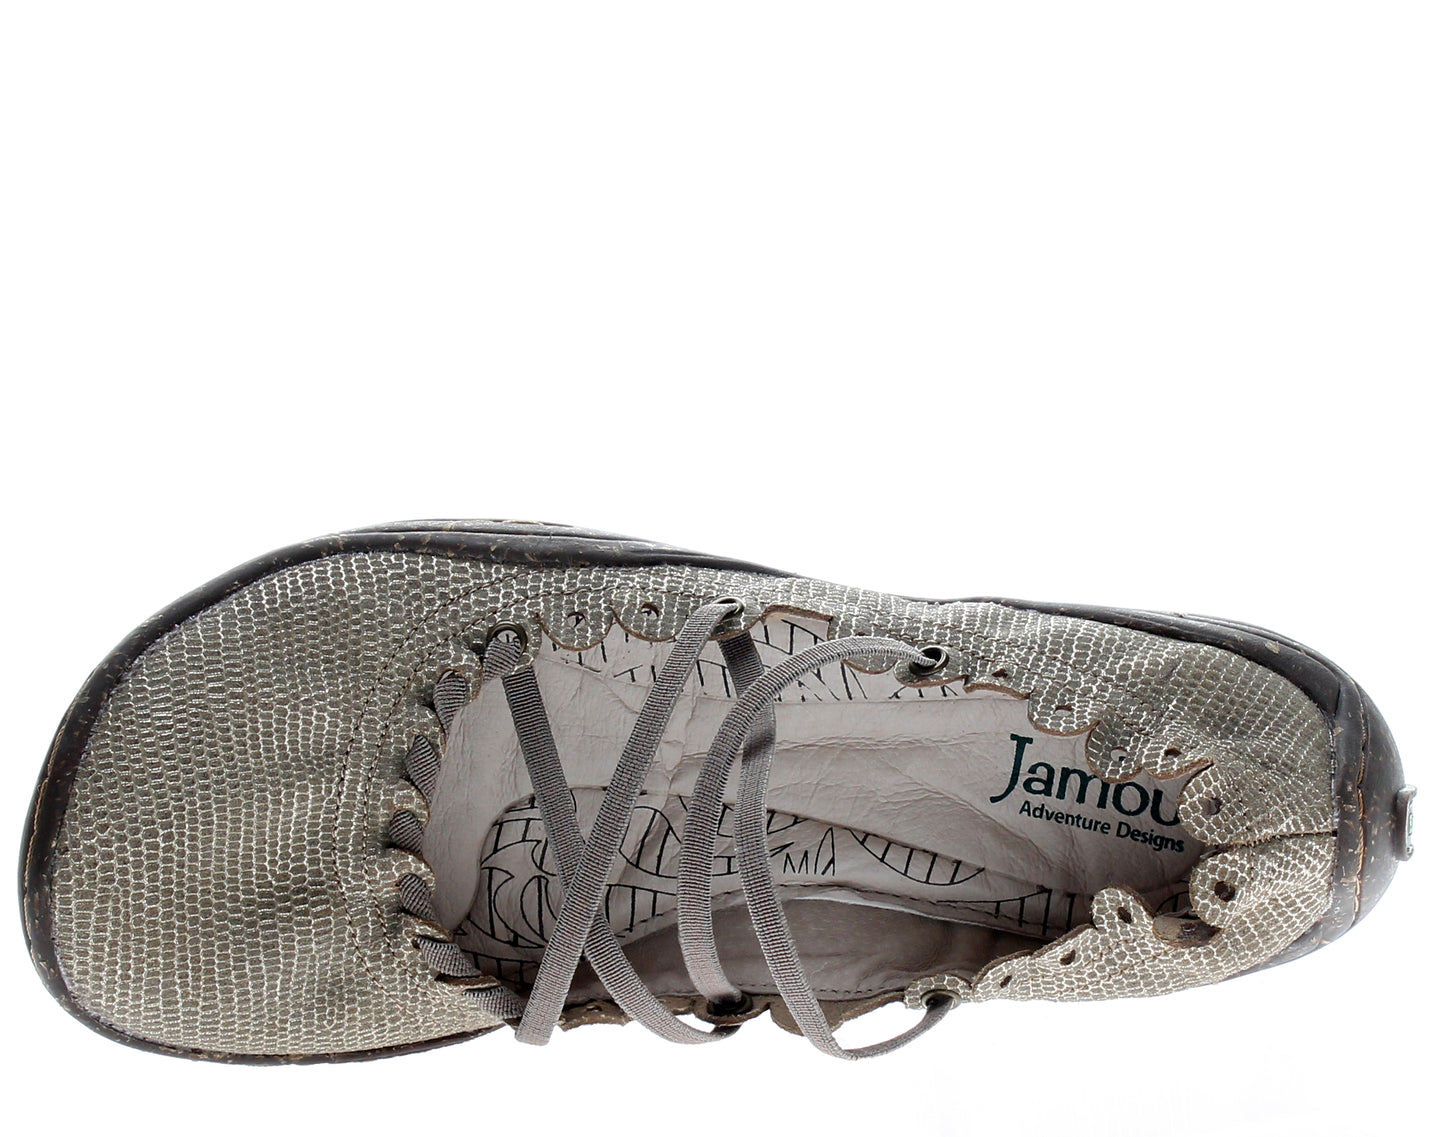 Jambu Kettle Women's Ballerina Flat Shoes